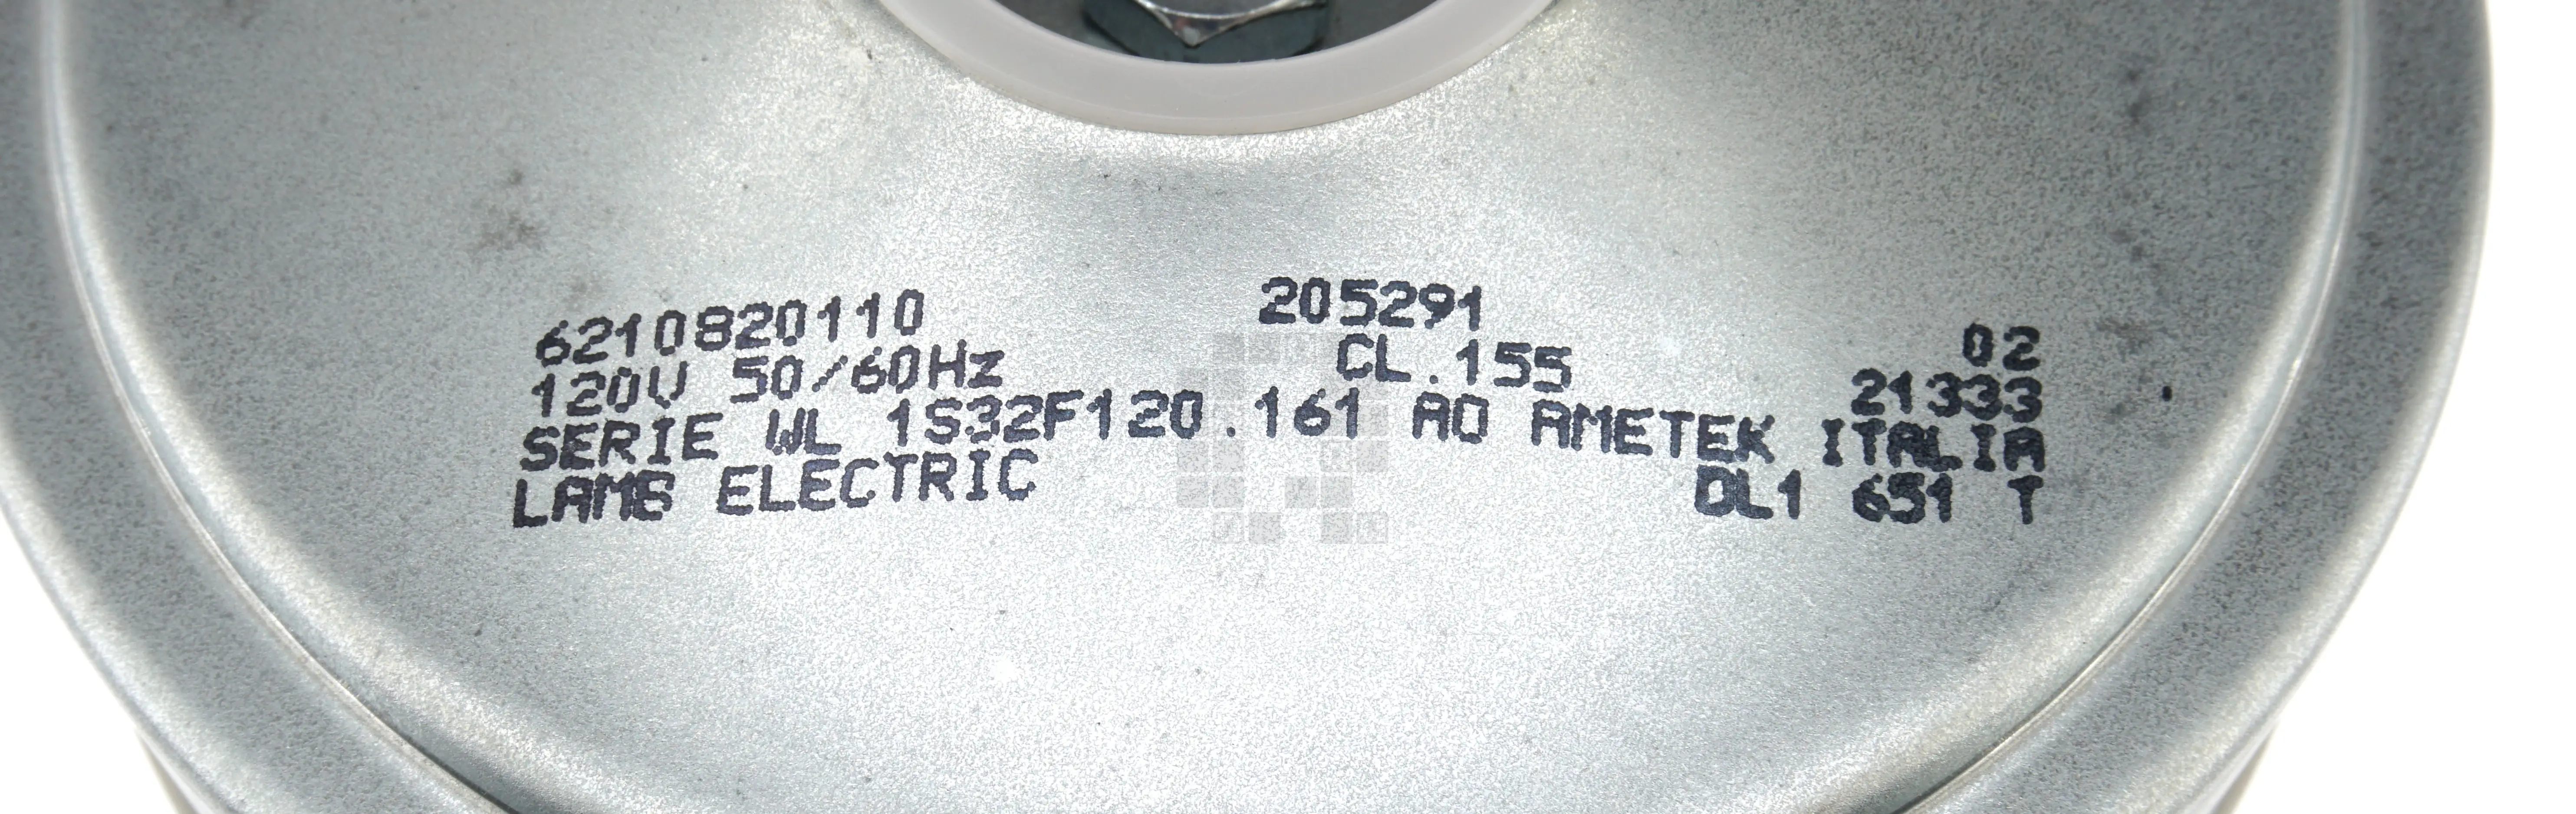 Henry Xtra Vacuum 120VAC Electric Motor Markings